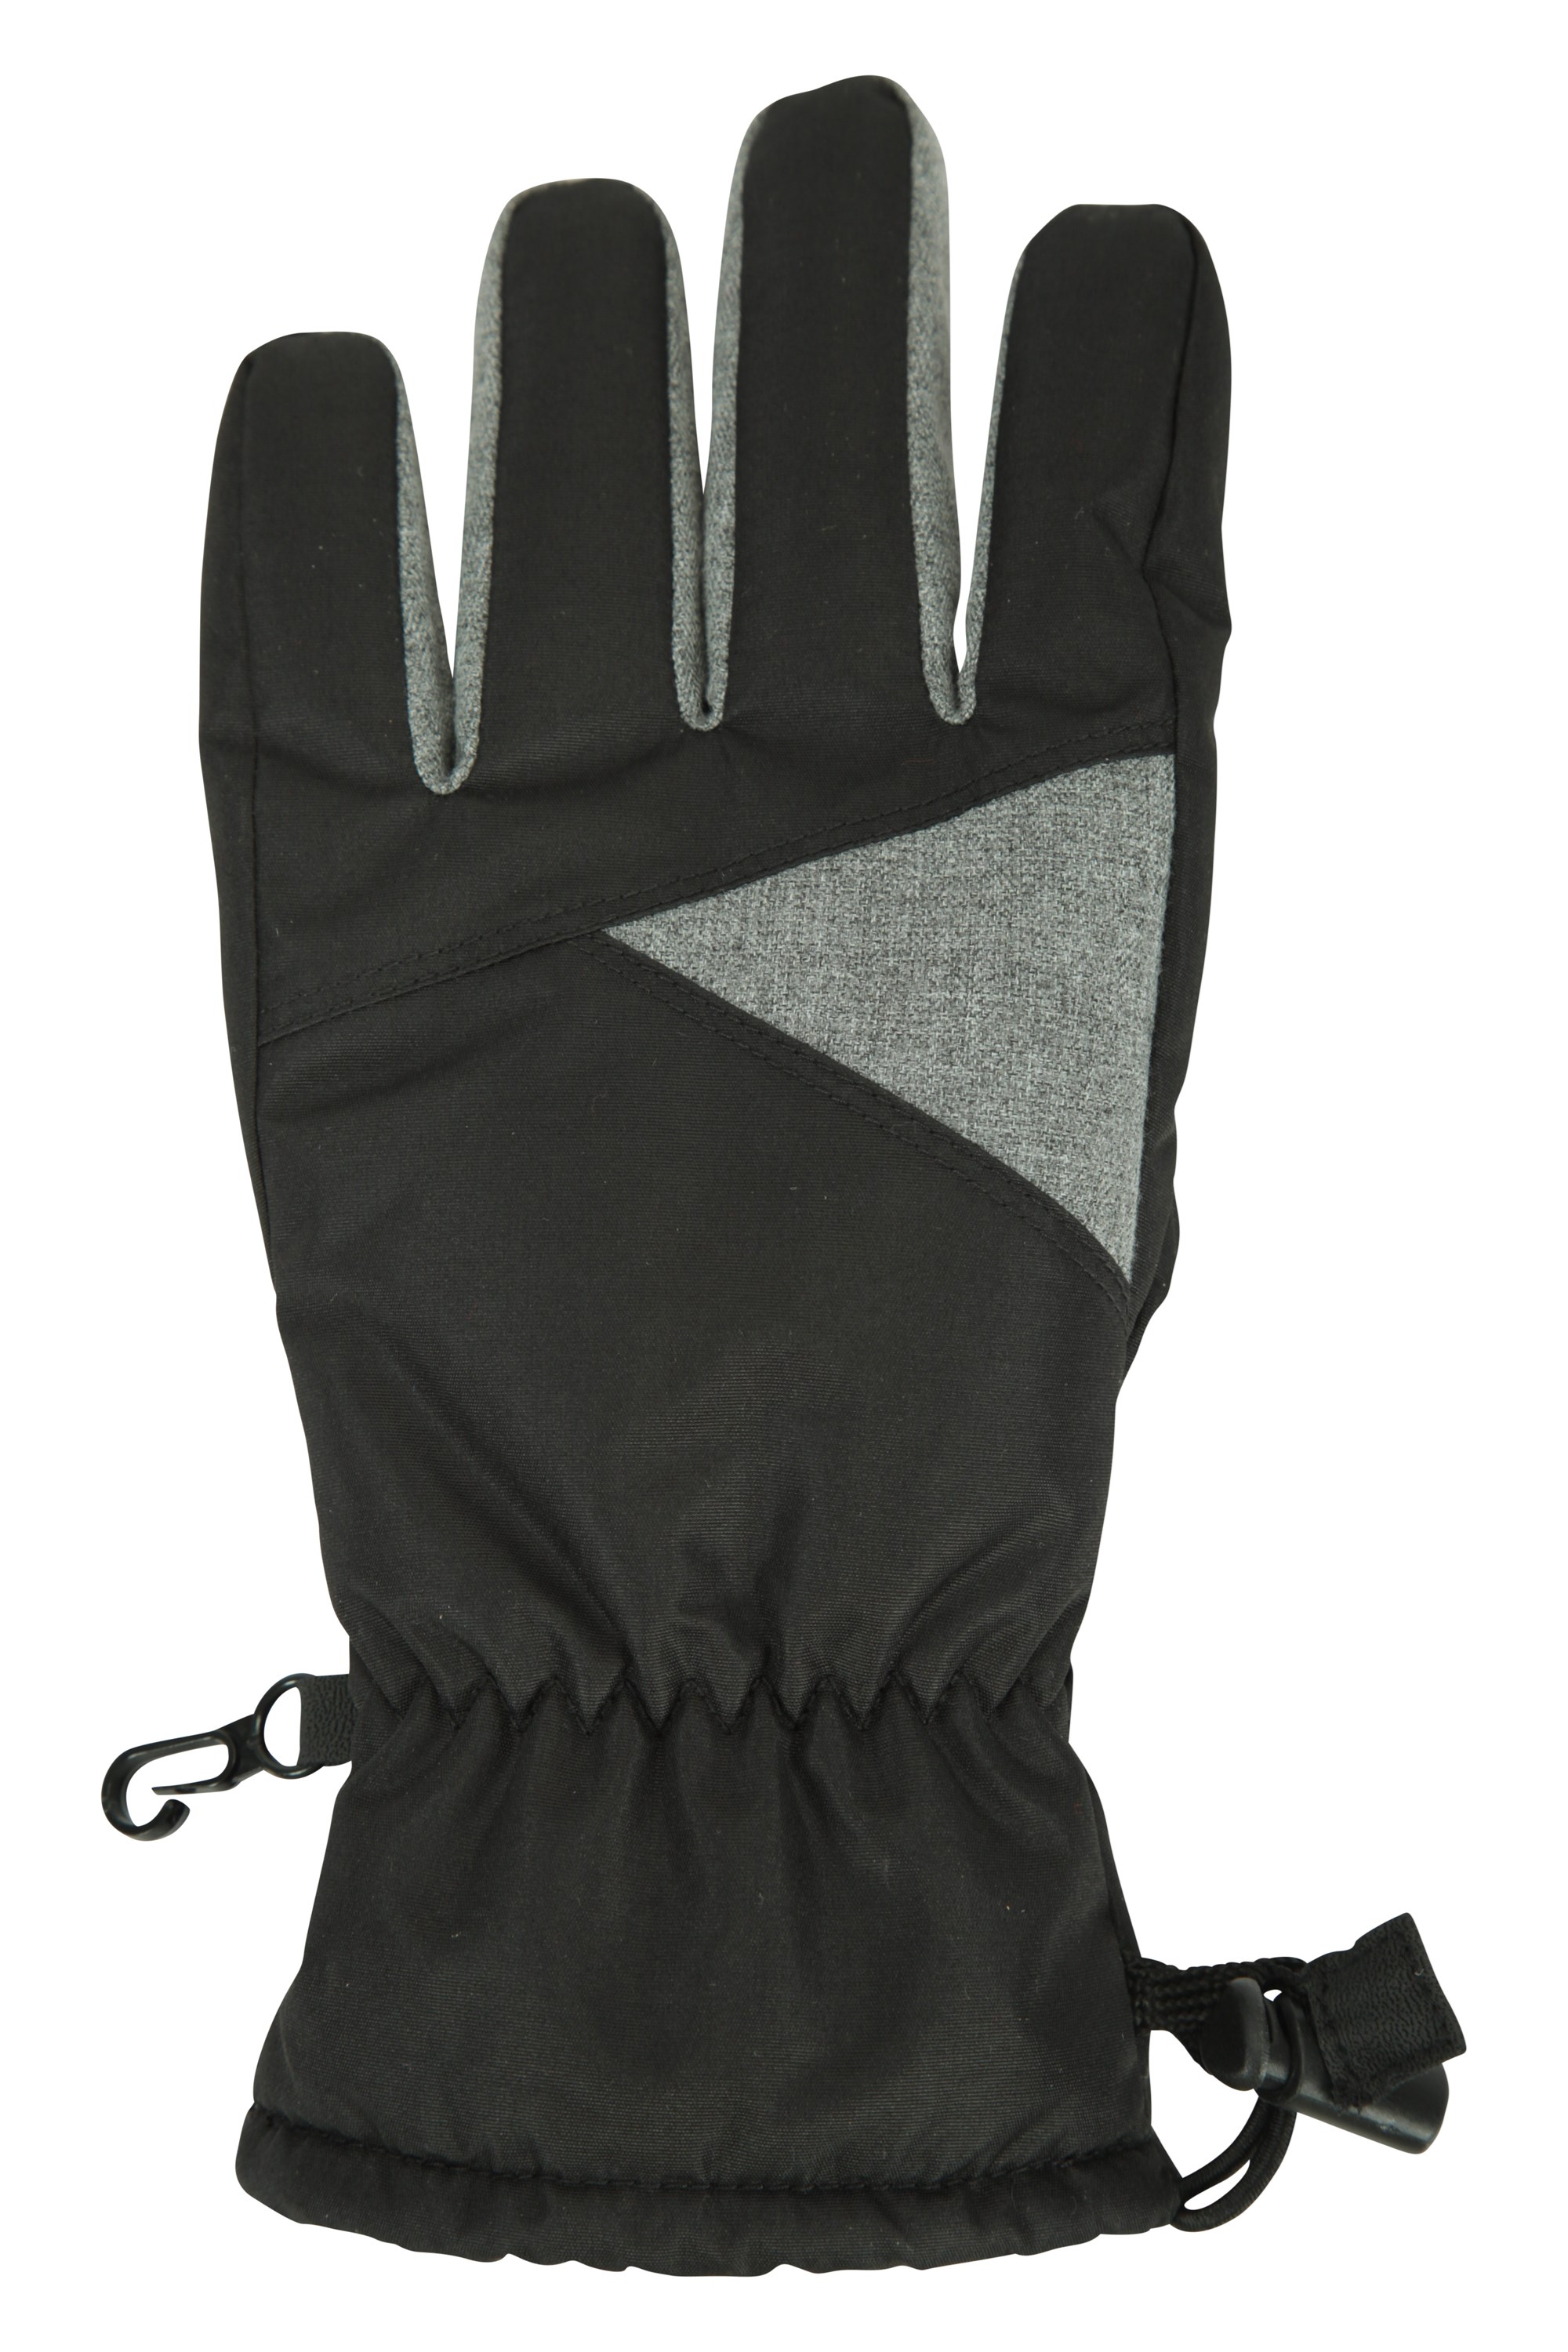 Mountain Warehouse Unisex Kids Insulated Ski Gloves MC7 Black Large NWT 